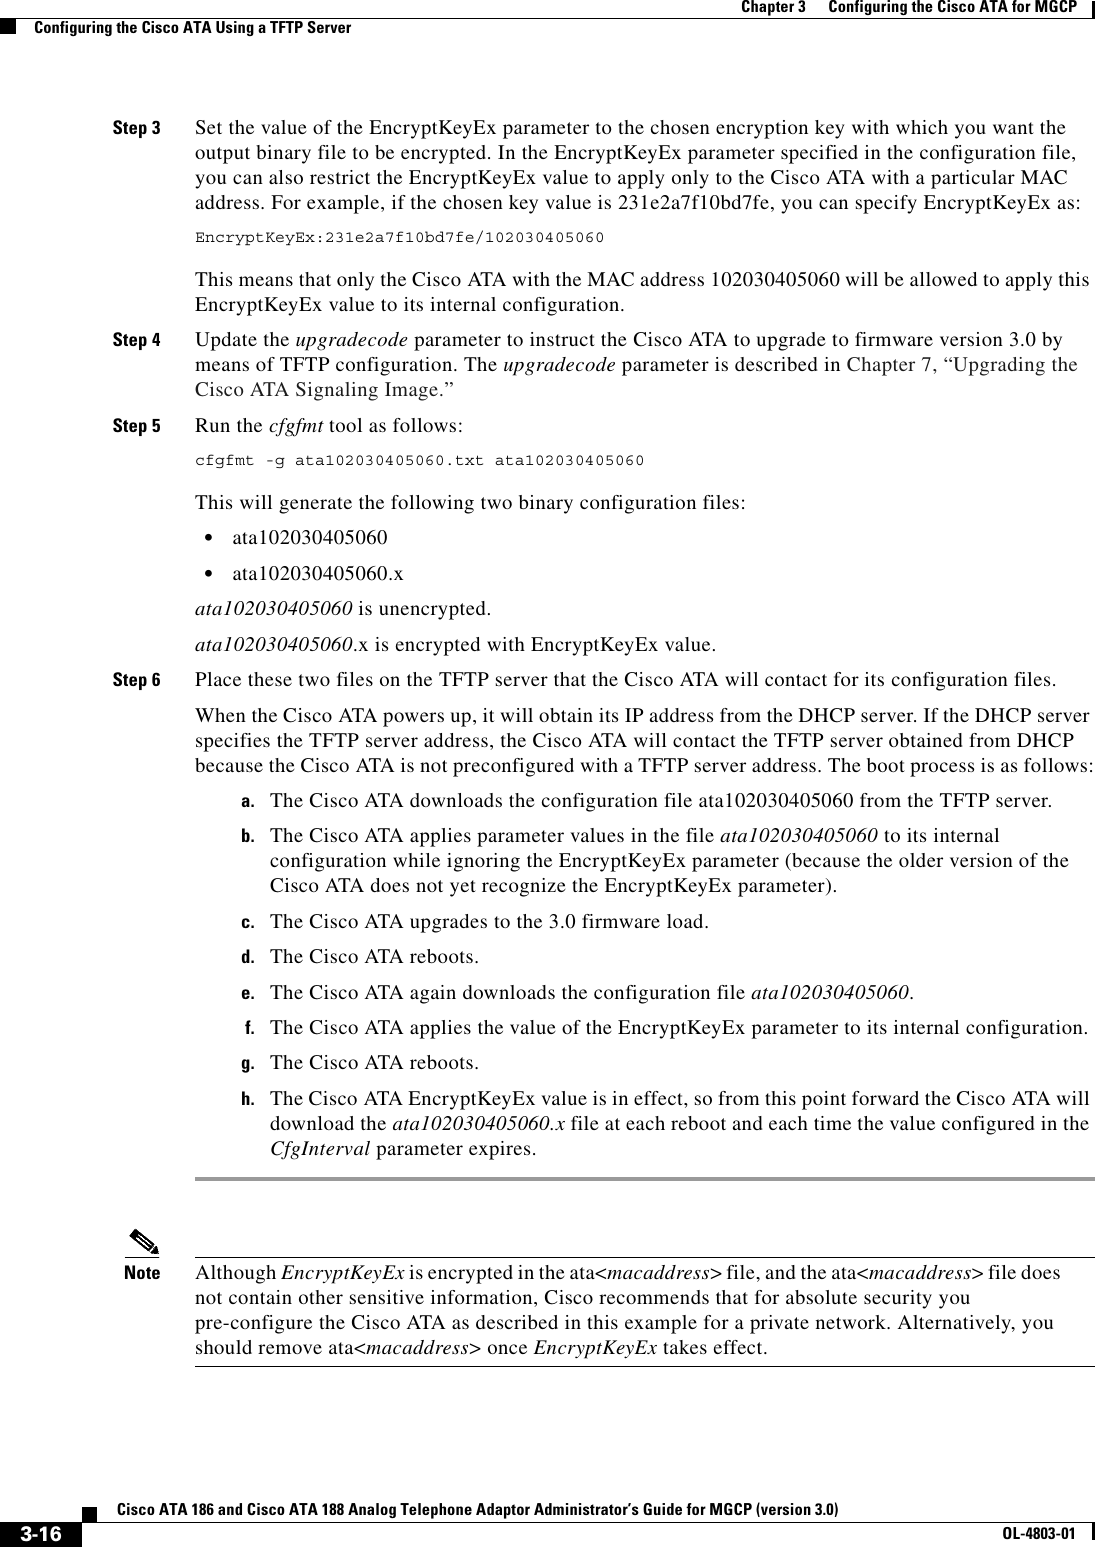 Cisco Systems Ata 186 Users Manual And 188 Analog Telephone